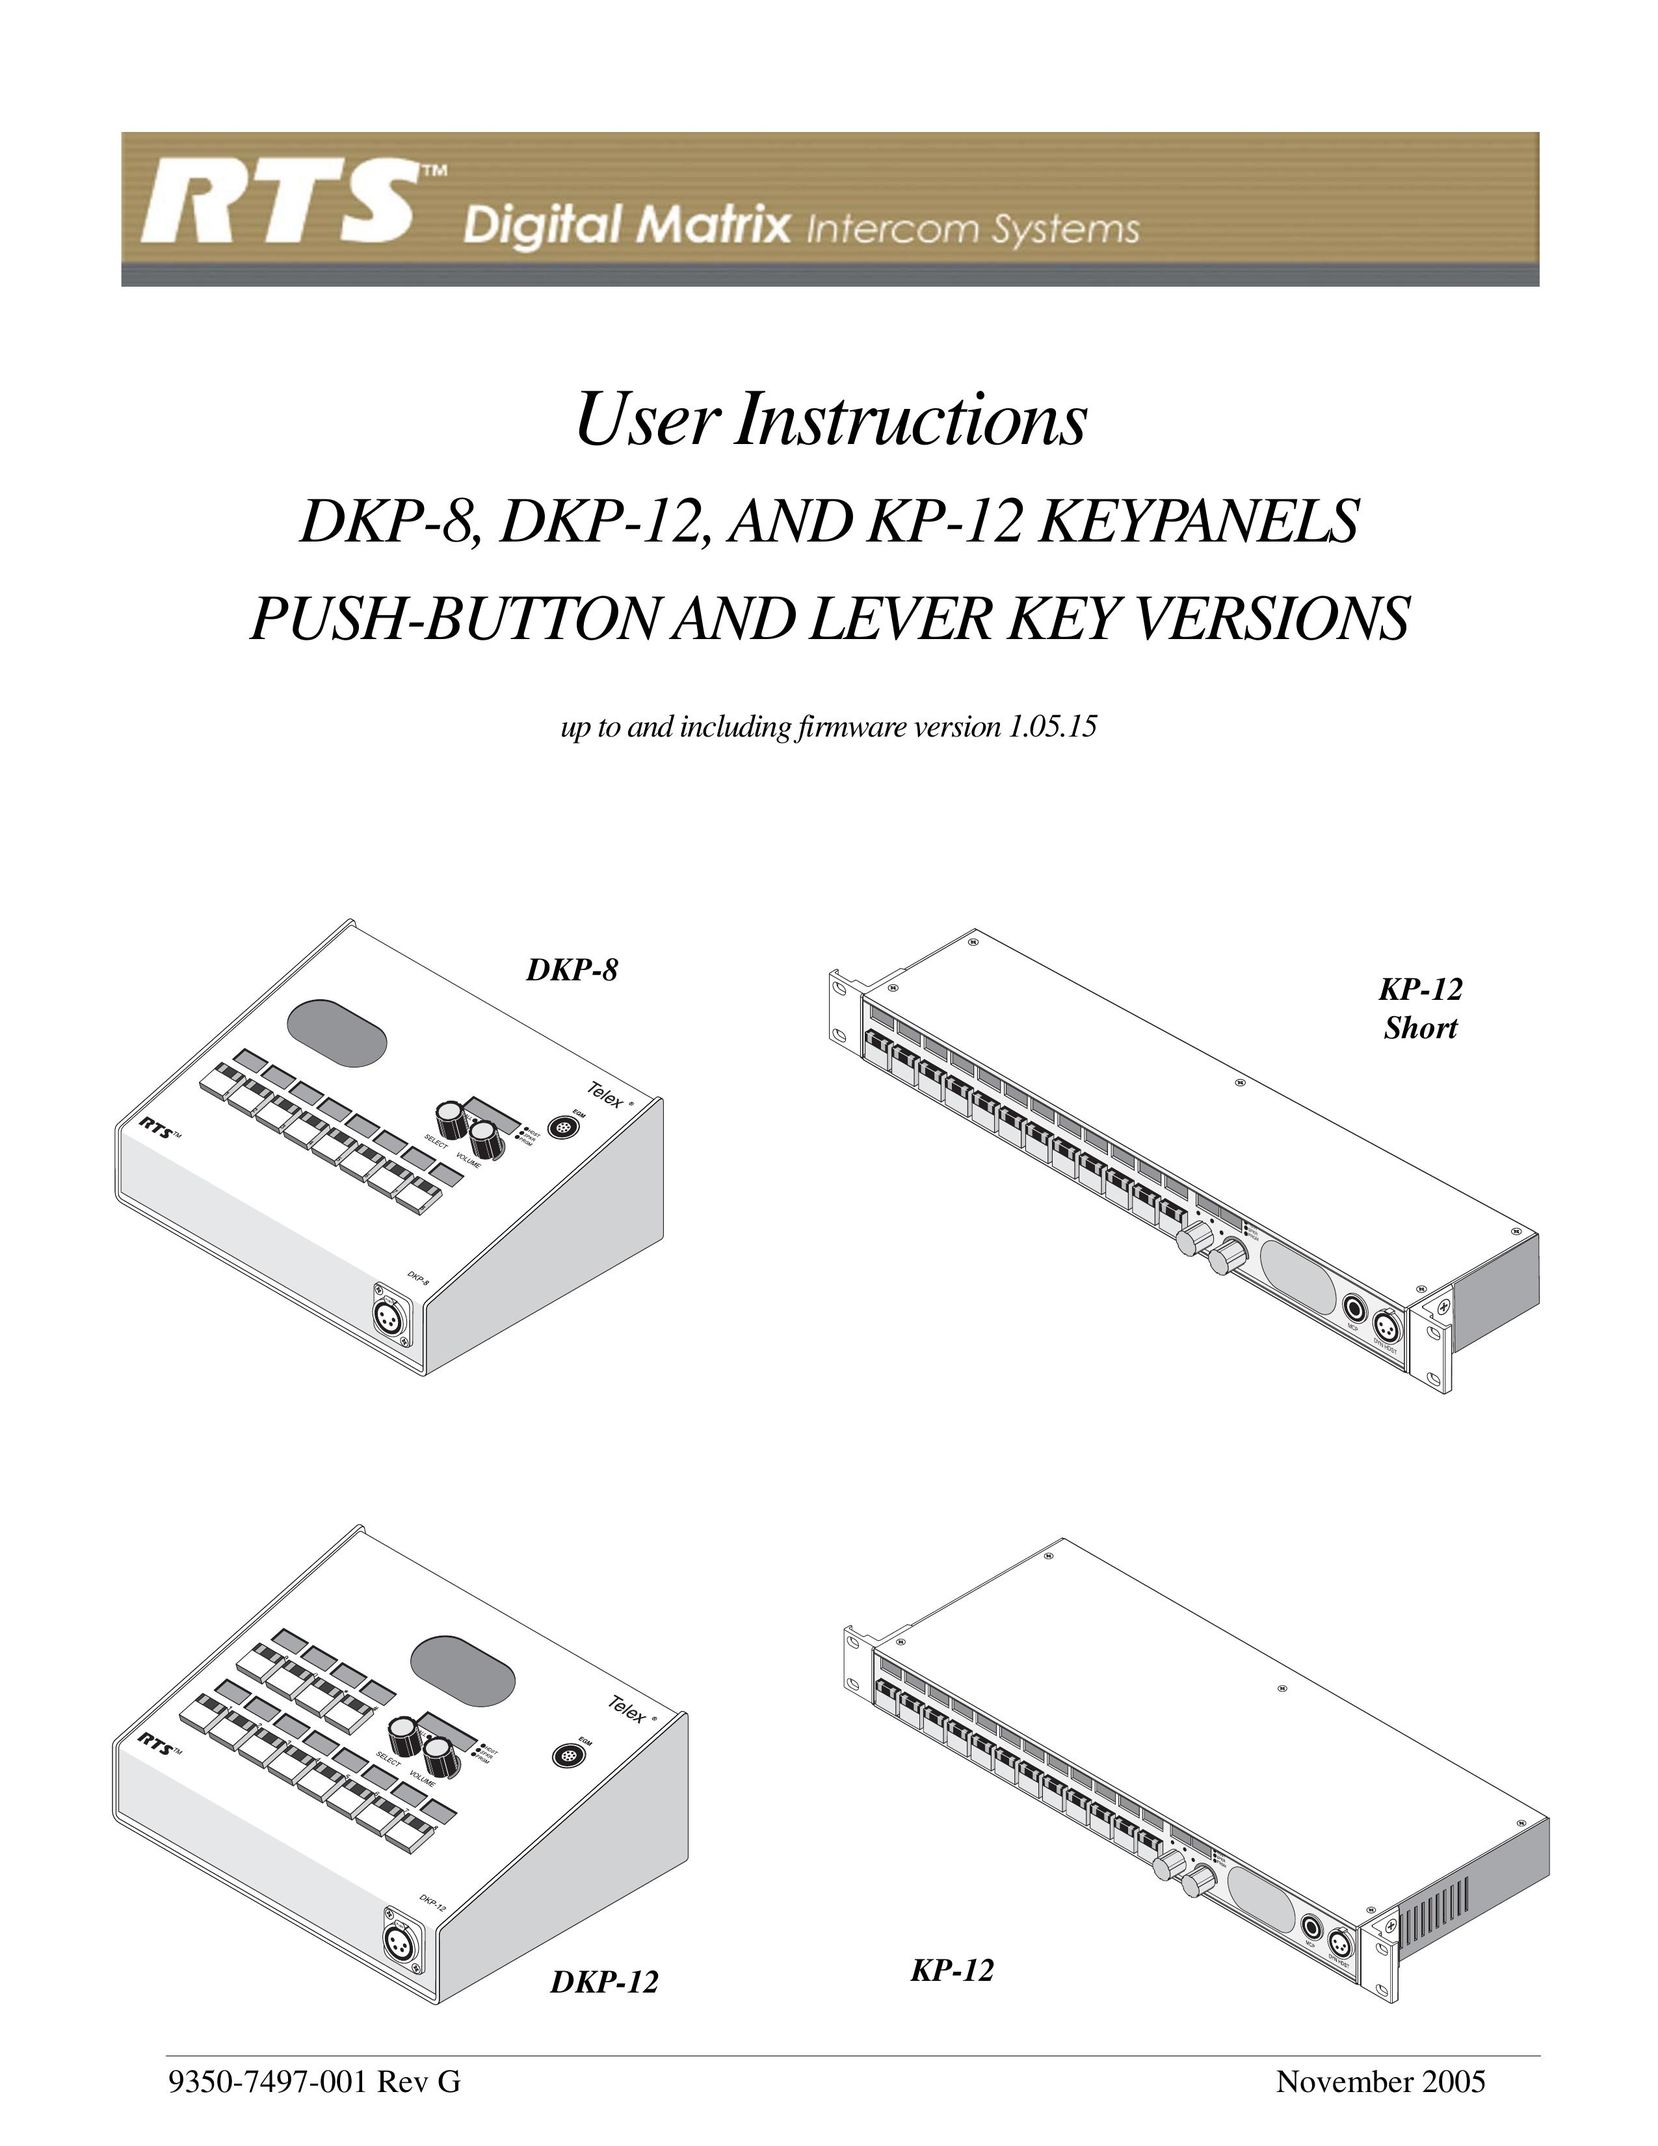 RTS DKP-8 Intercom System User Manual